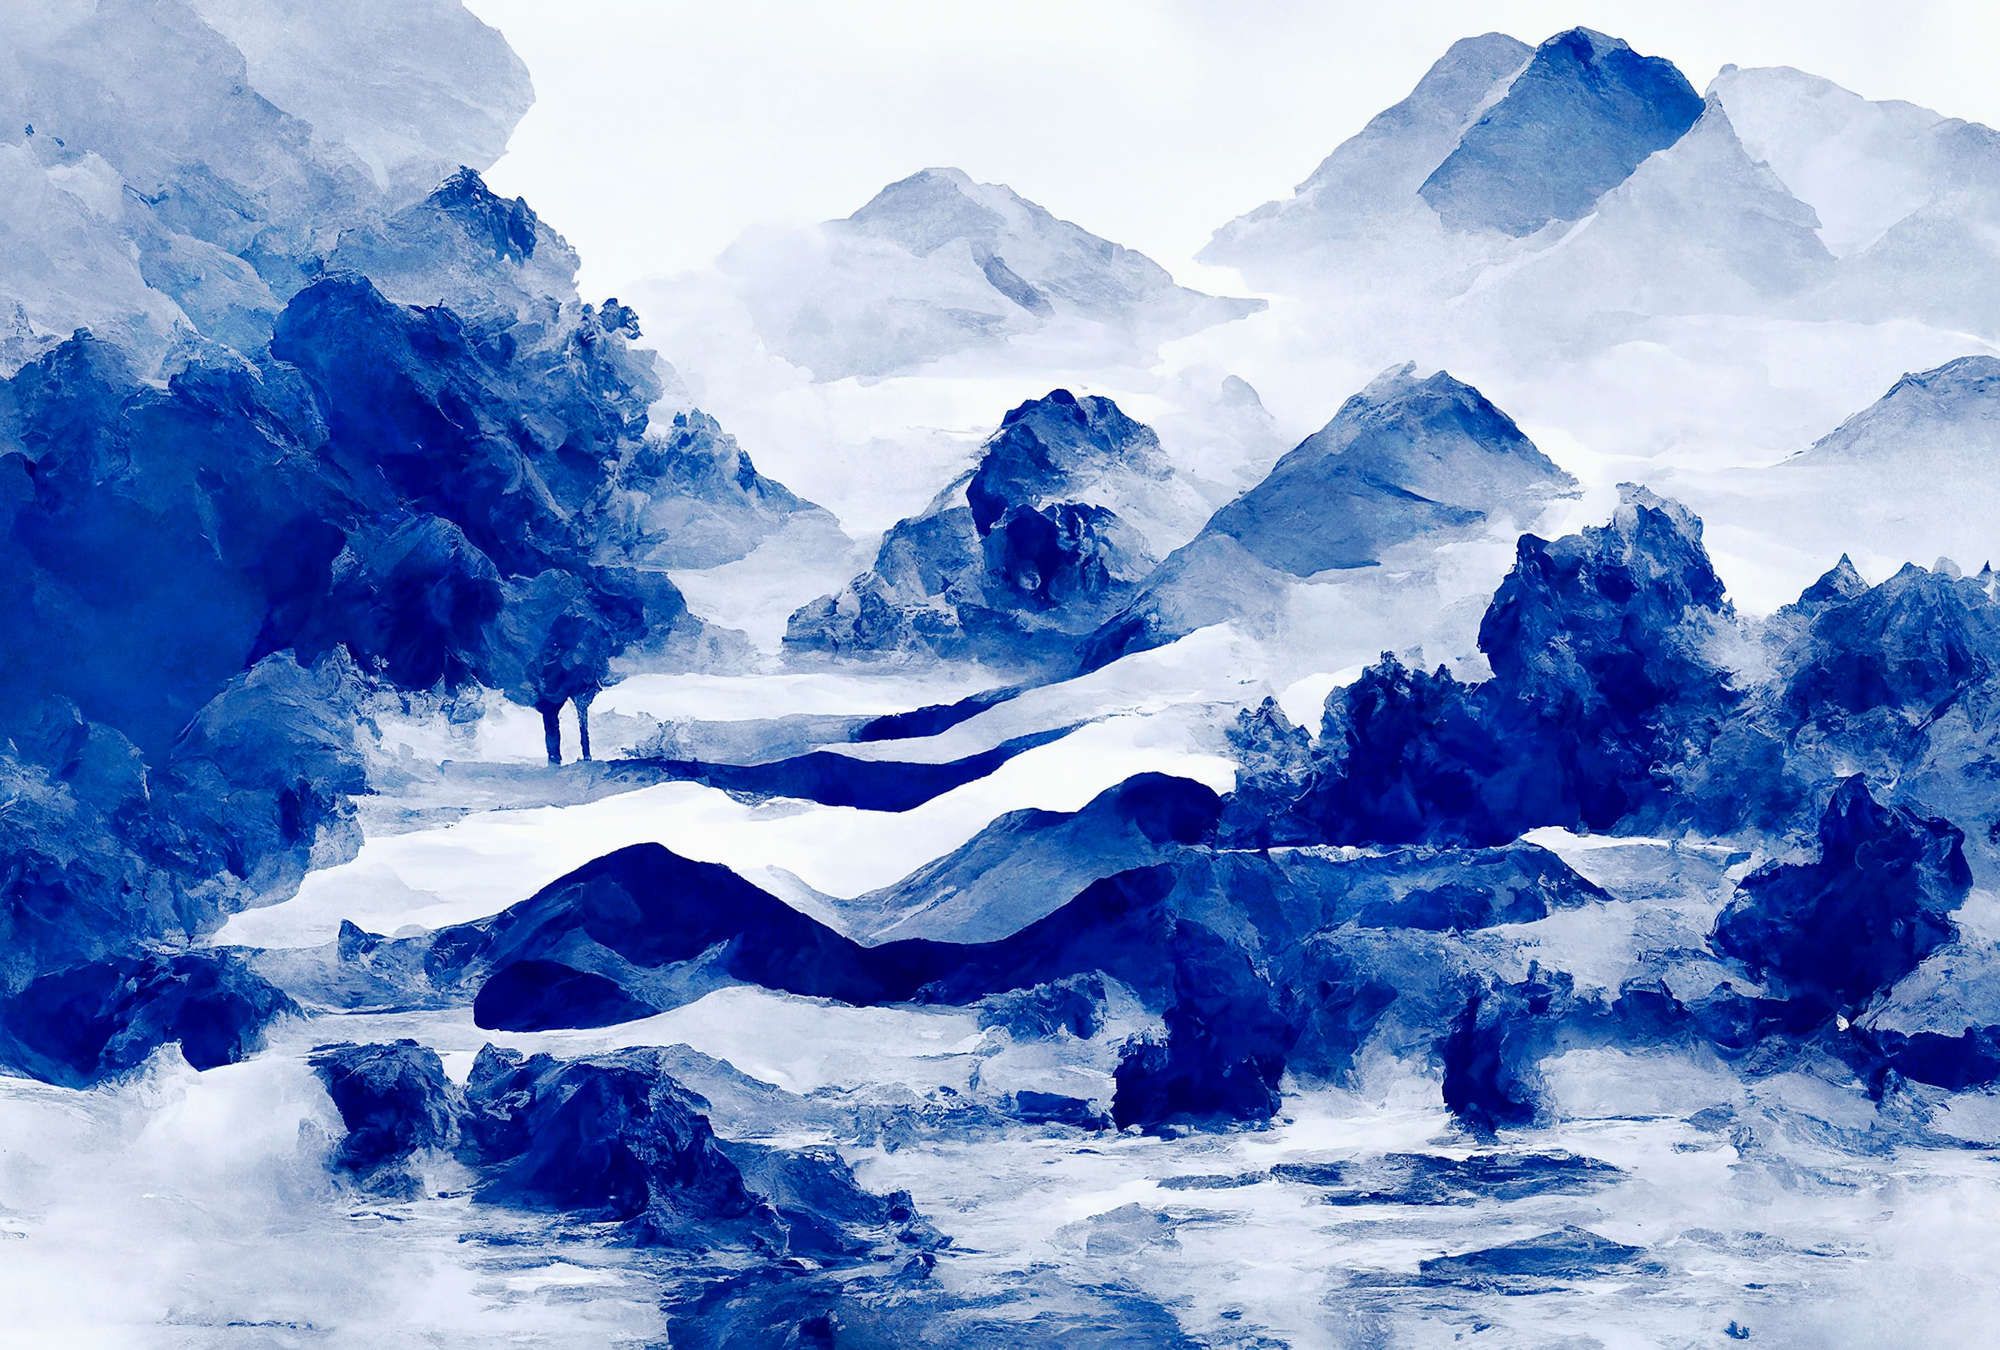             Photo wallpaper »tinterra 3« - Landscape with mountains & fog - Blue | Light textured non-woven
        